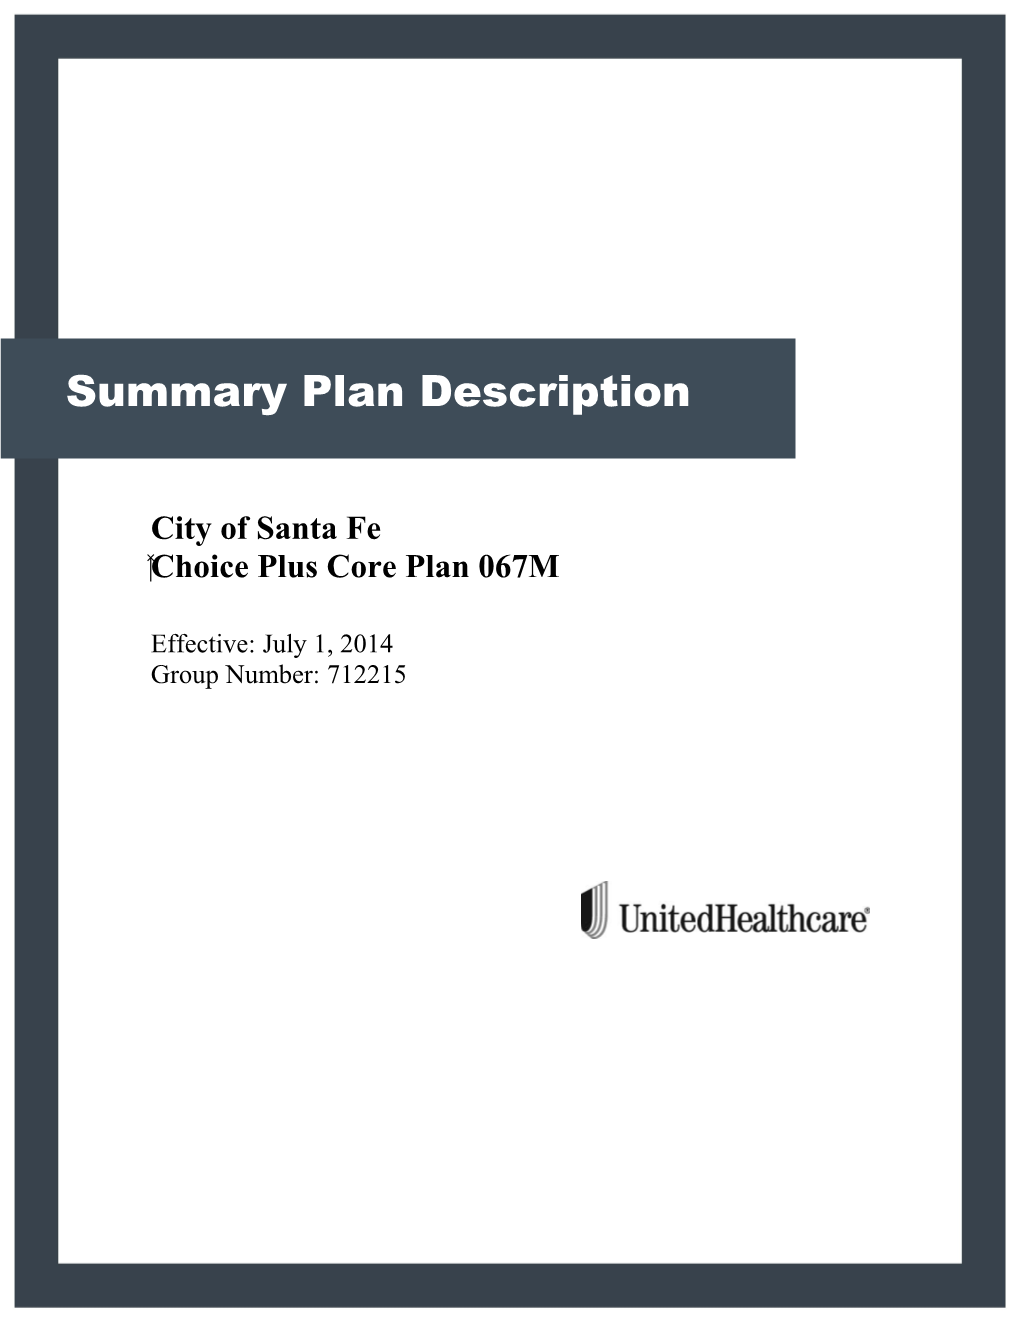 City of Santa Fe Medical Choice Plus Core Plan 067M